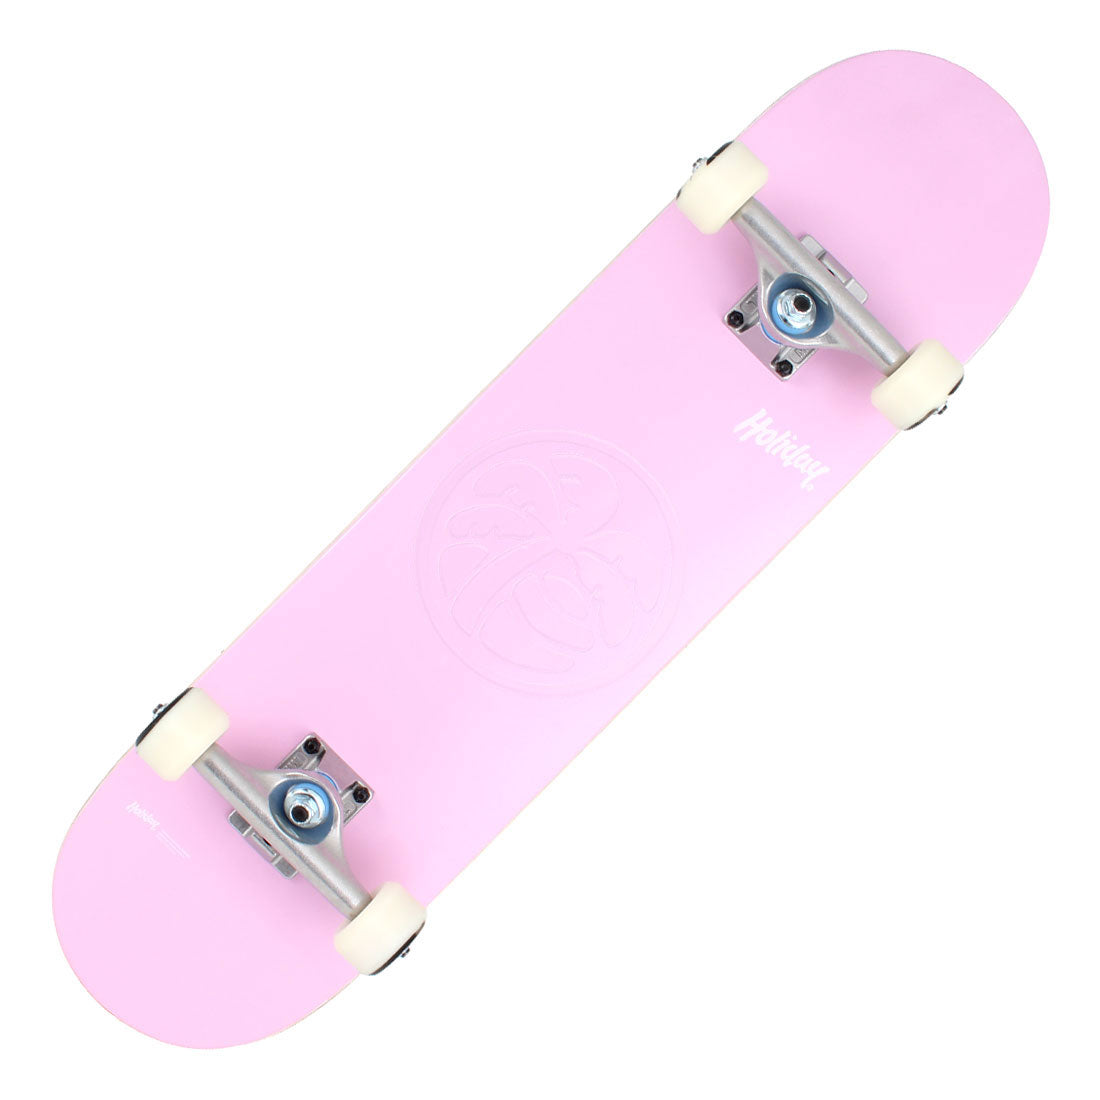 Holiday Sunday Best 7.5 Complete - Pastel Pink Skateboard Completes Modern Street